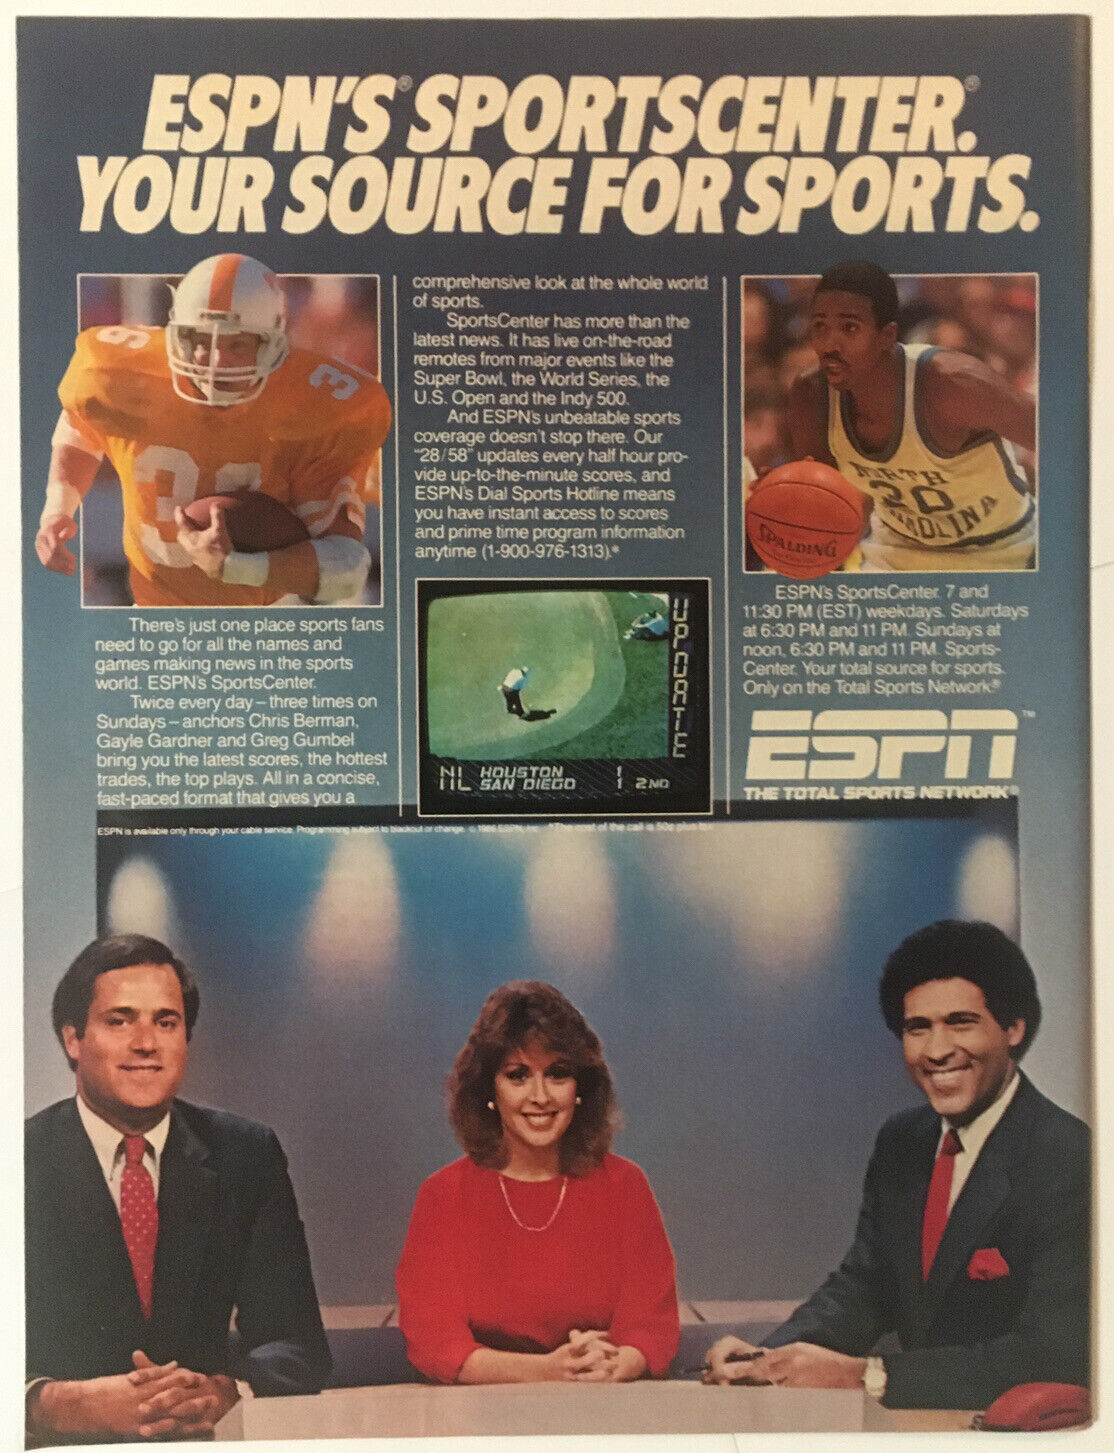 Chris Berman Gayle Gardner Greg Gumbel ESPN 1986 Vintage Print Ad 8x11 Inches